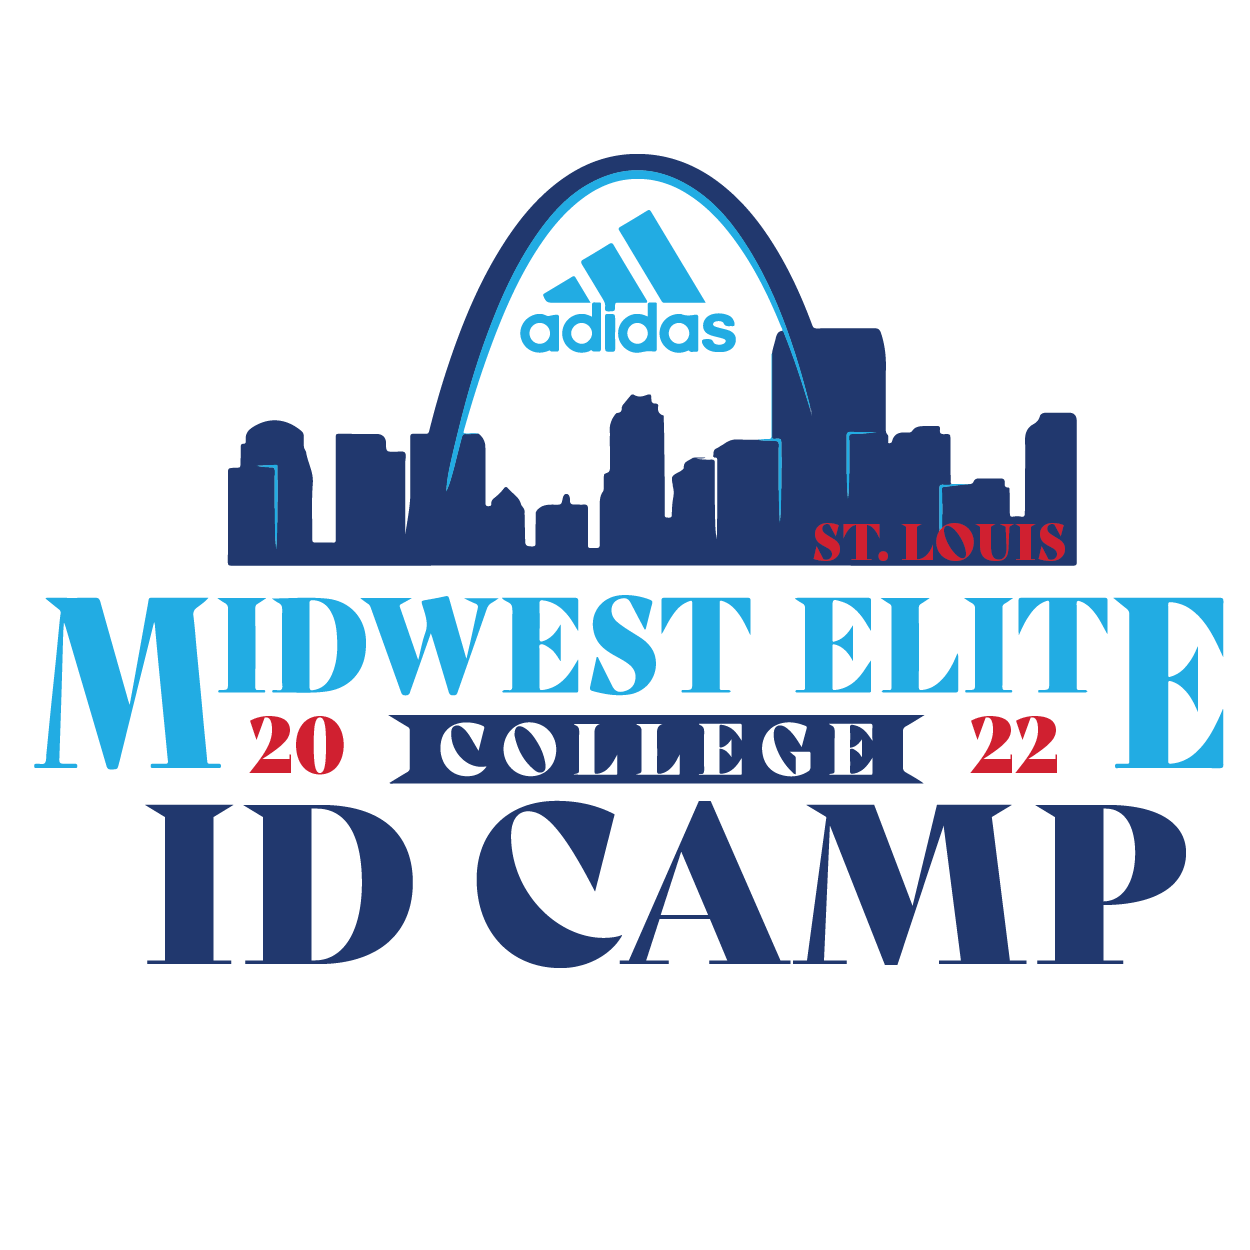 Midwest-Elite-College-IDcamp-LOGO-final-01